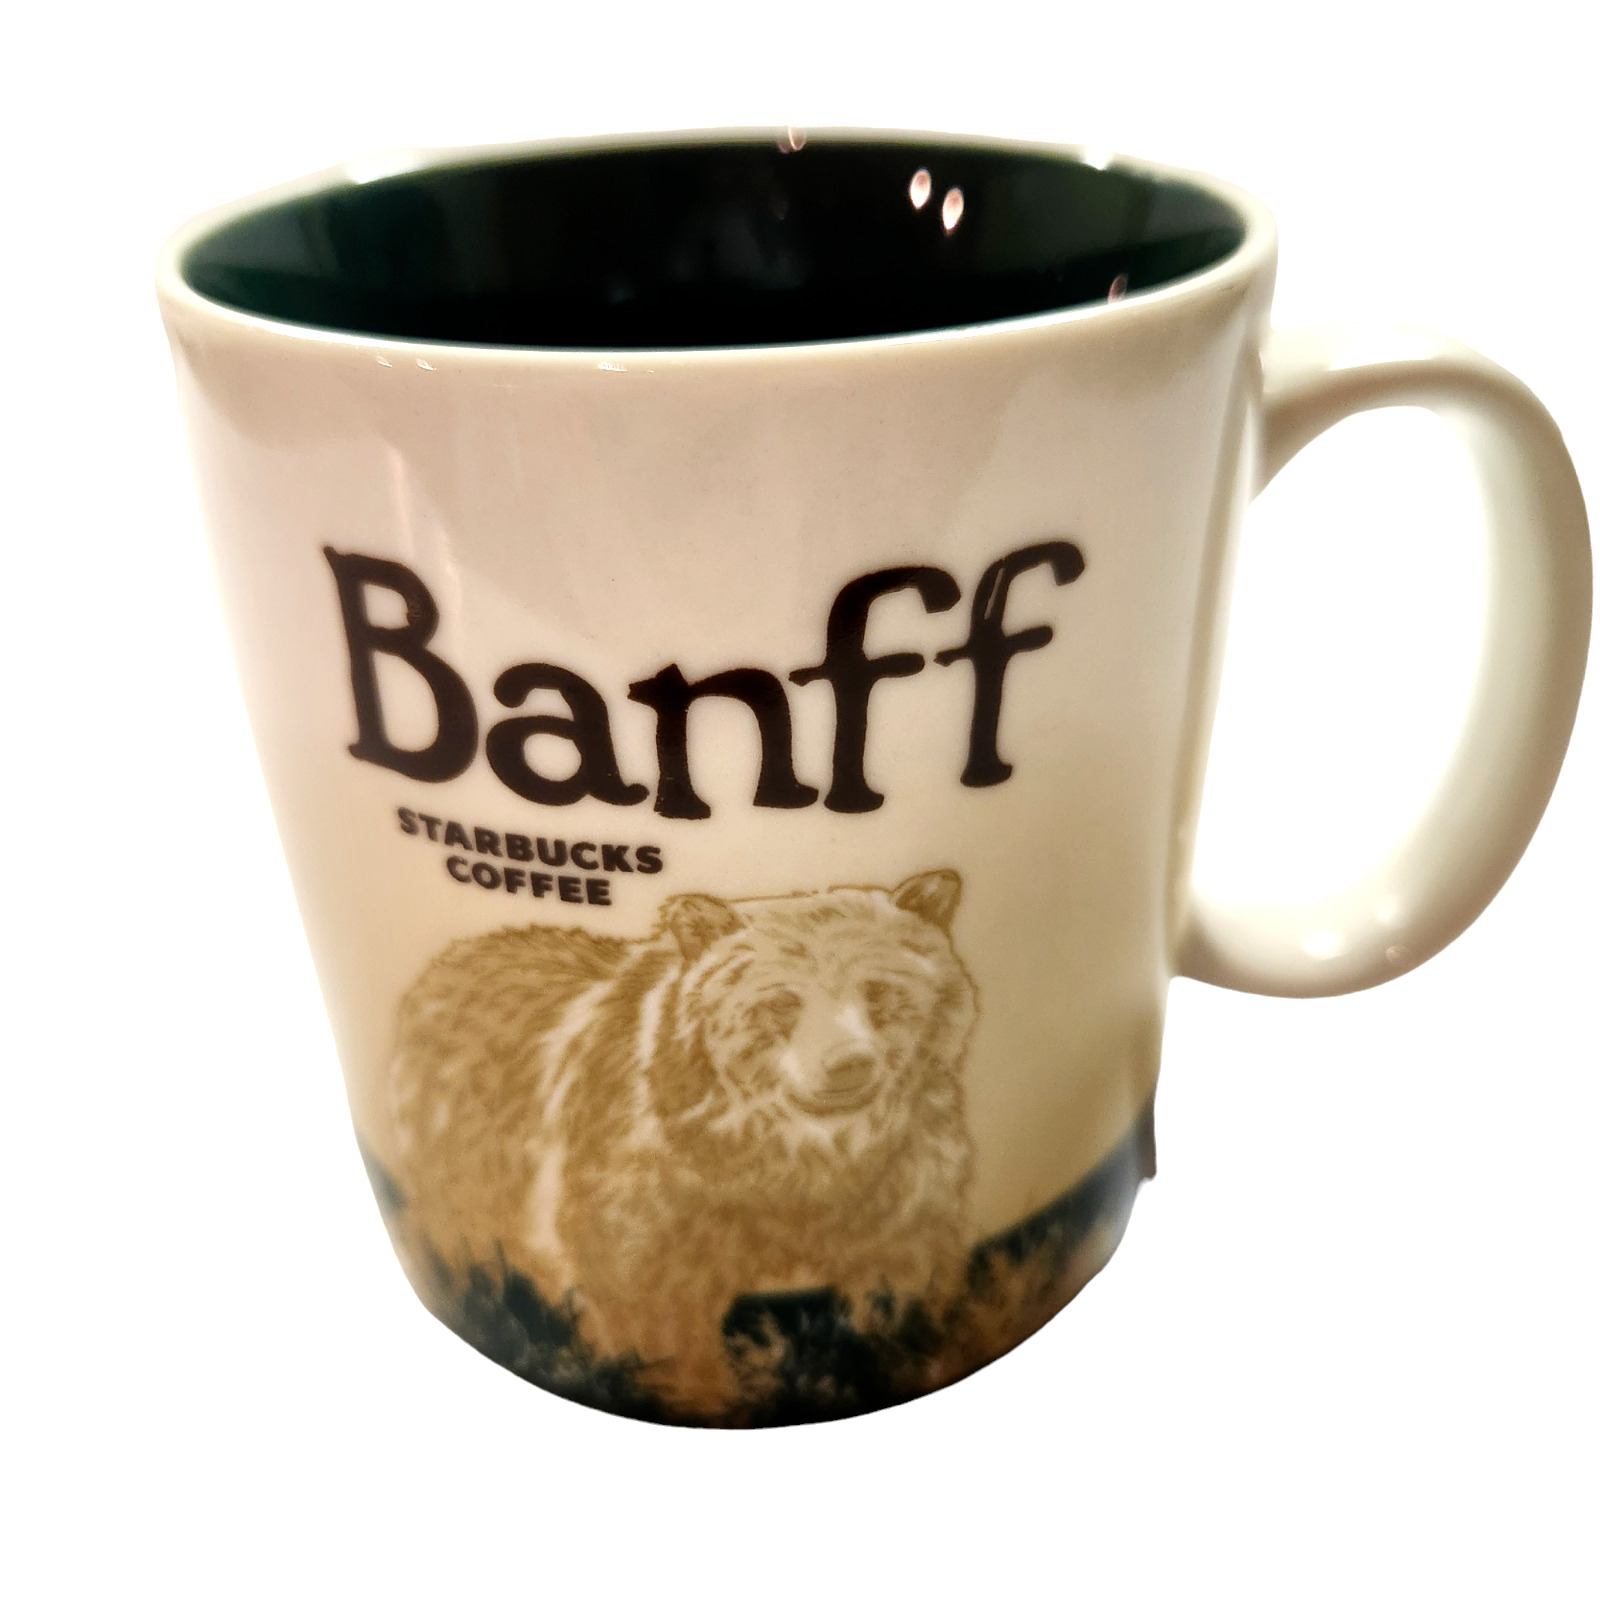 Starbucks Banff 2011 Stoneware Coffee Mug 16 fl oz